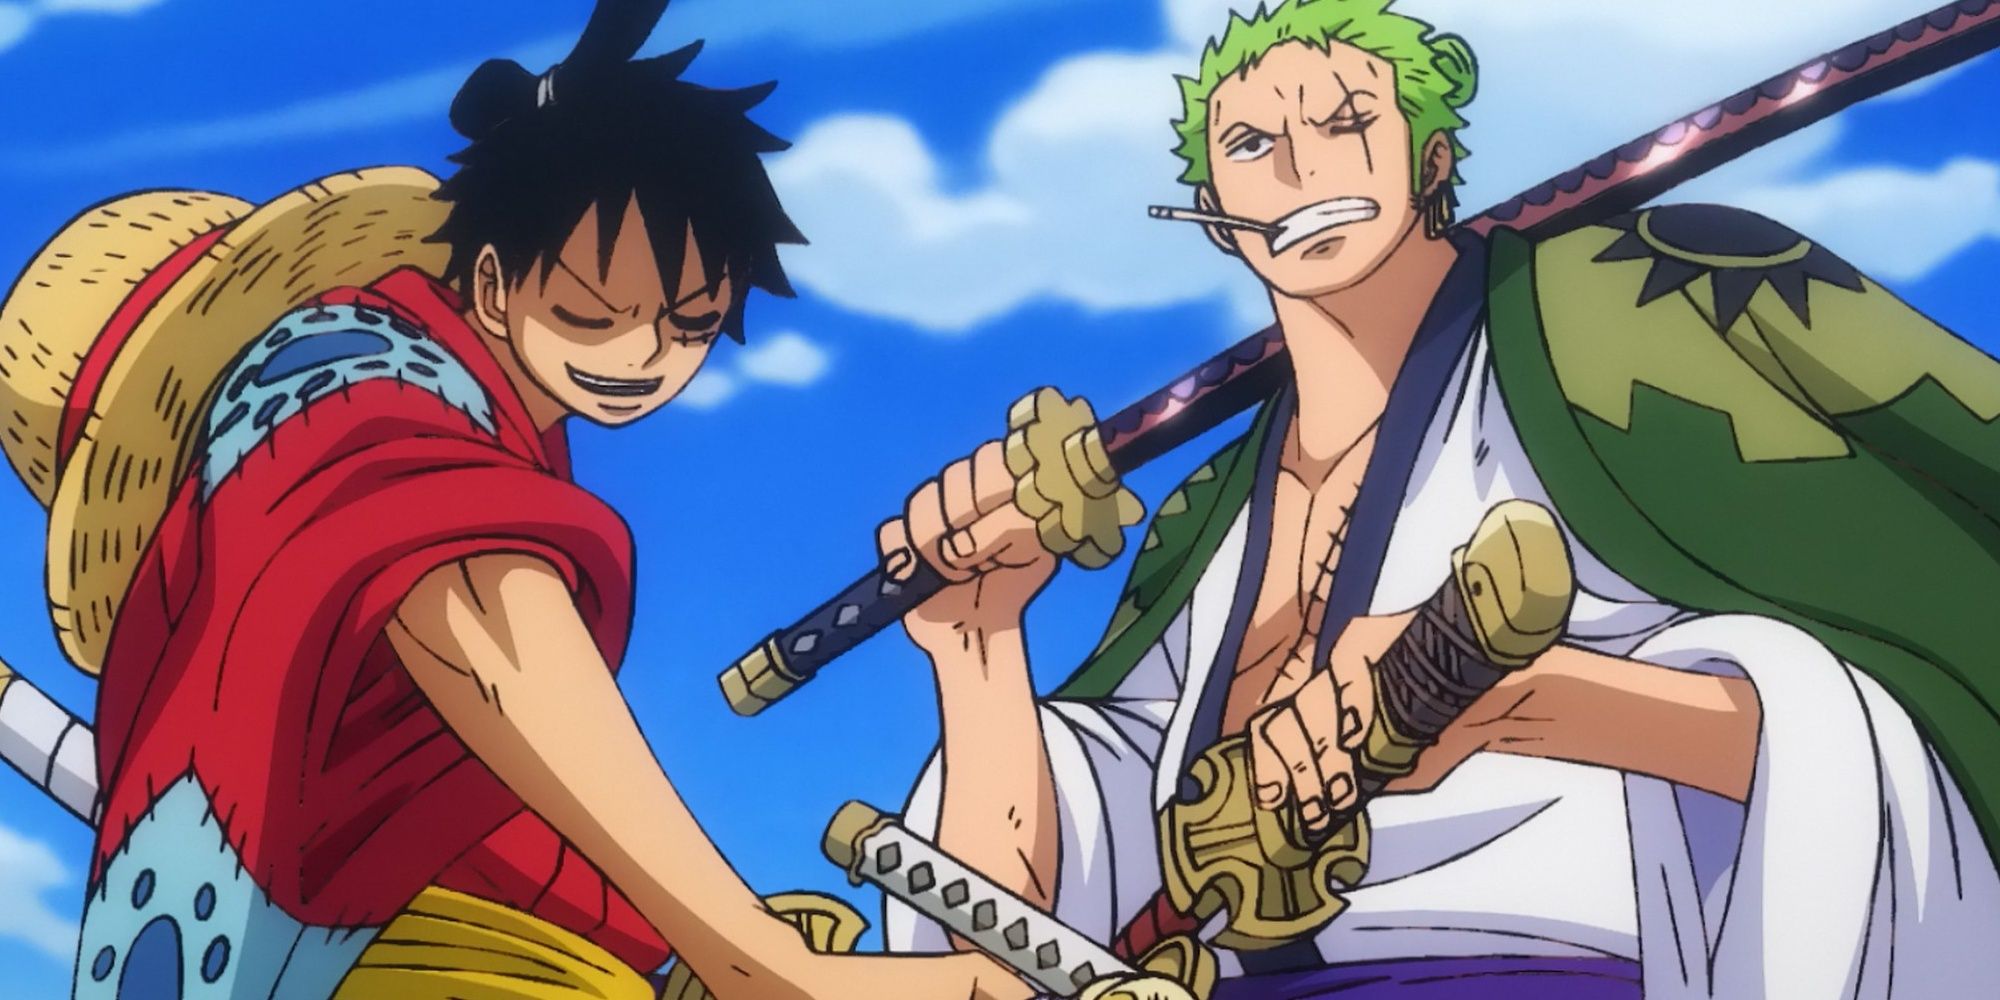 Luffy & Zoro holding swords